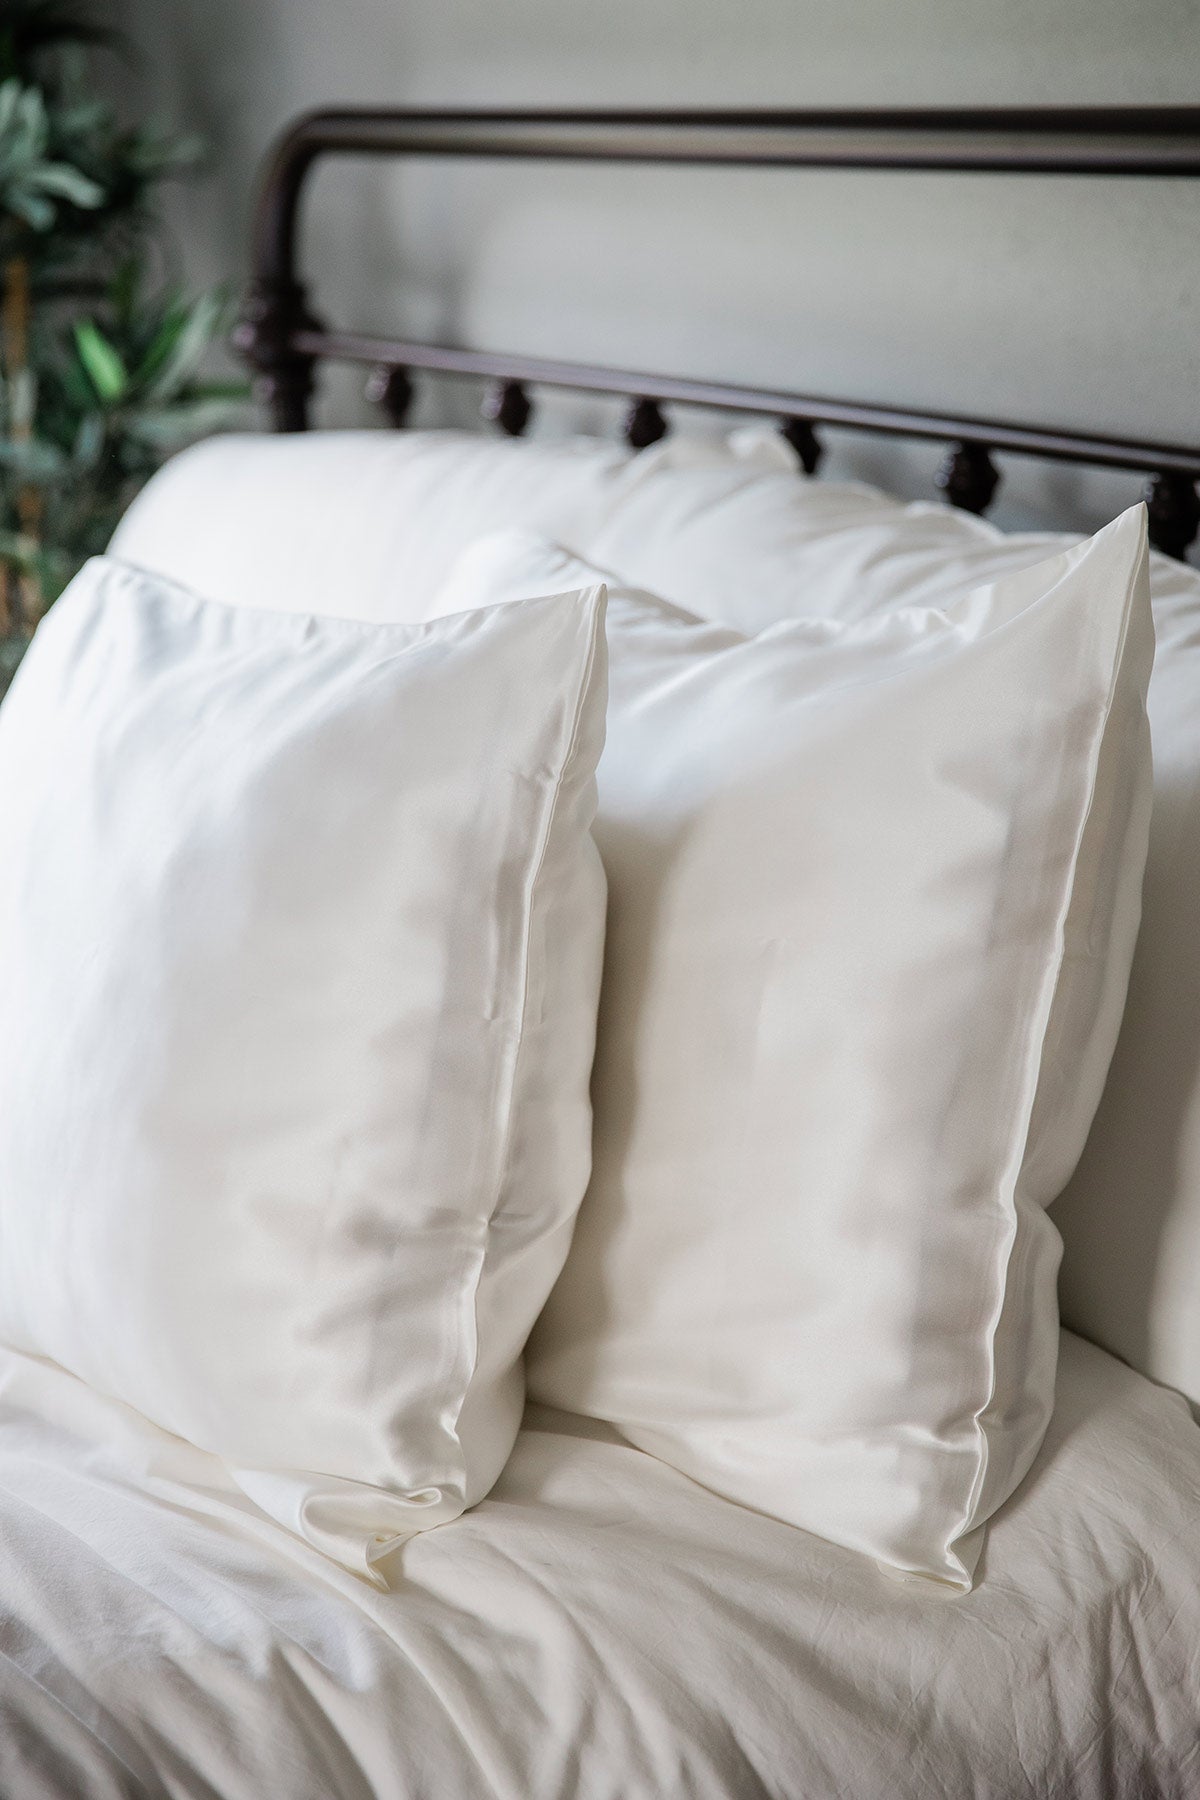 A pair of pillows enshrouded in Yala Charmeuse Pillowcase Set in Natural White